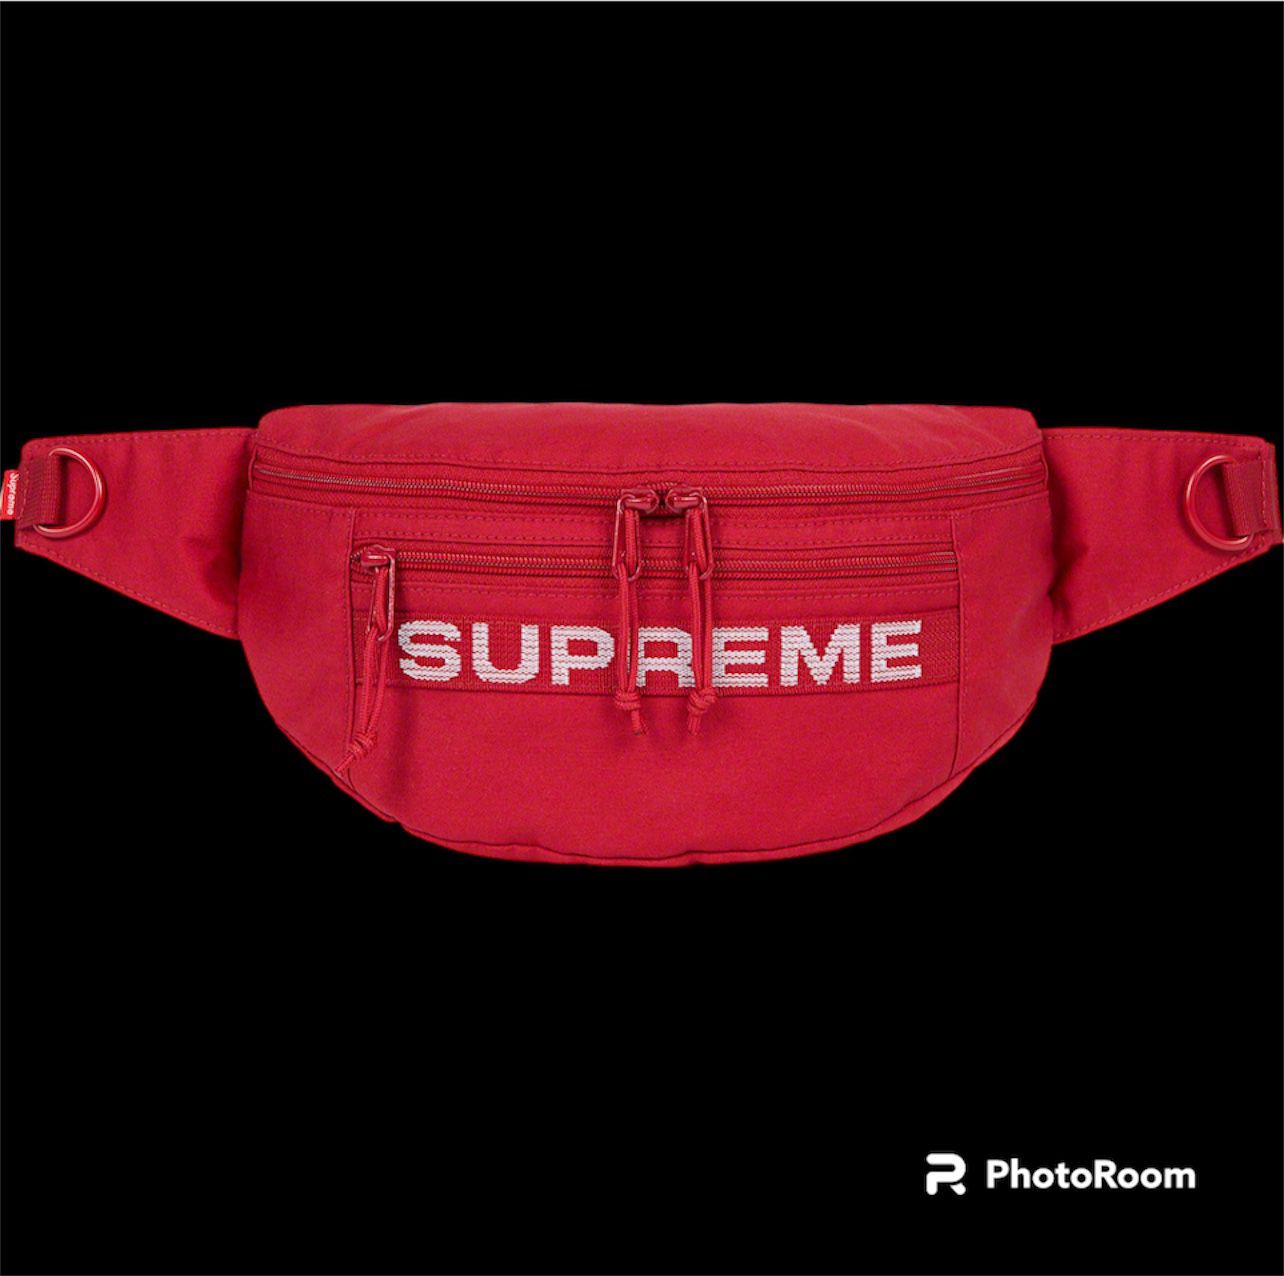 wearing supreme waist bag